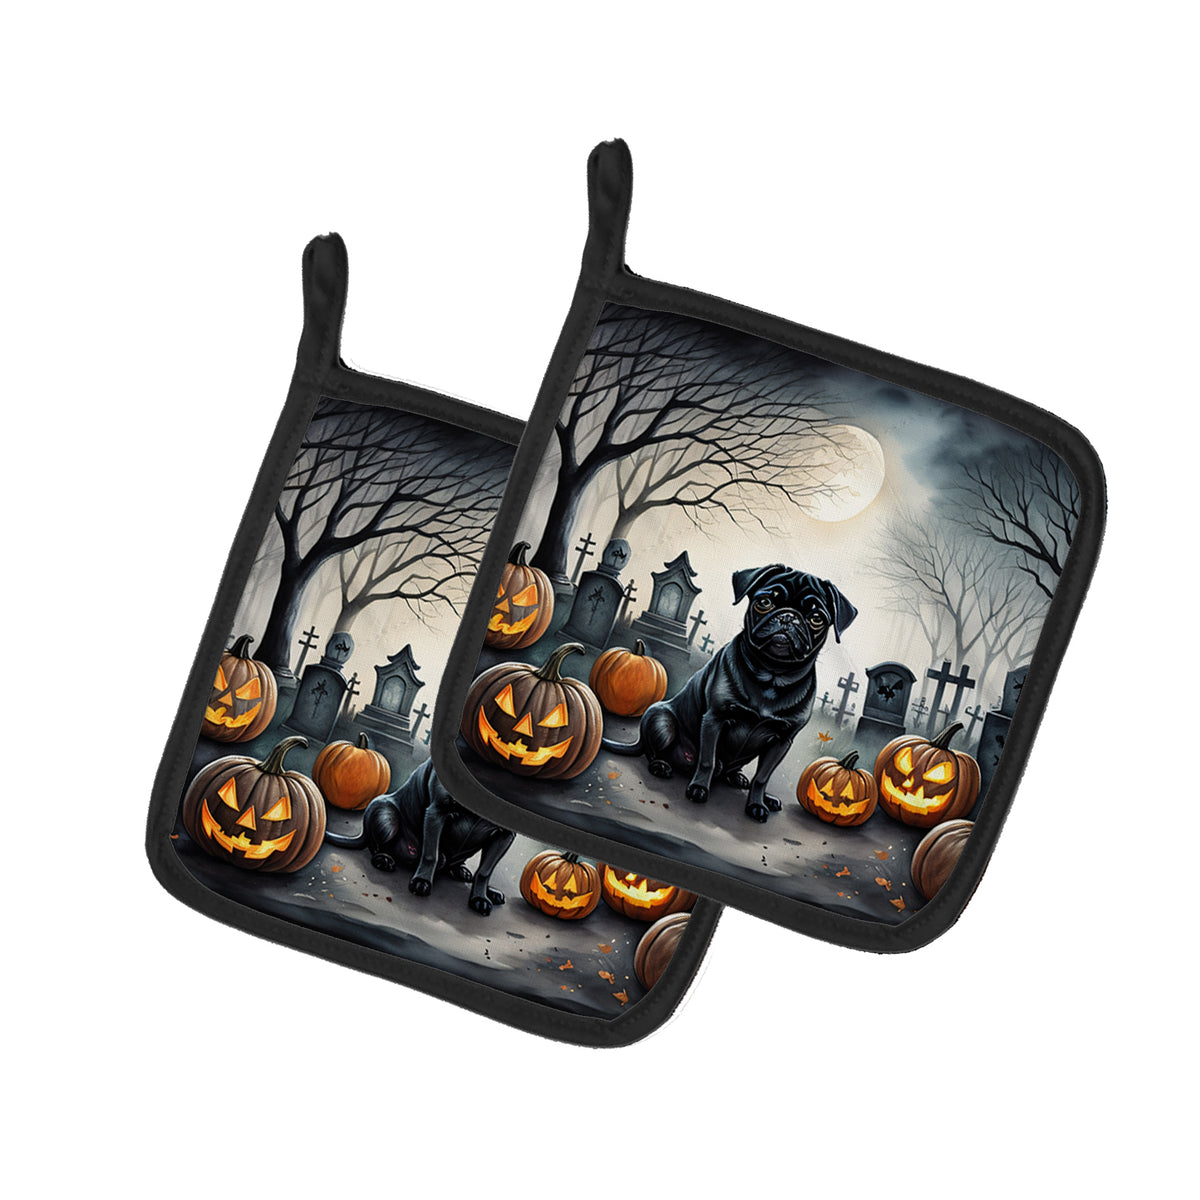 Buy this Black Pug Spooky Halloween Pair of Pot Holders